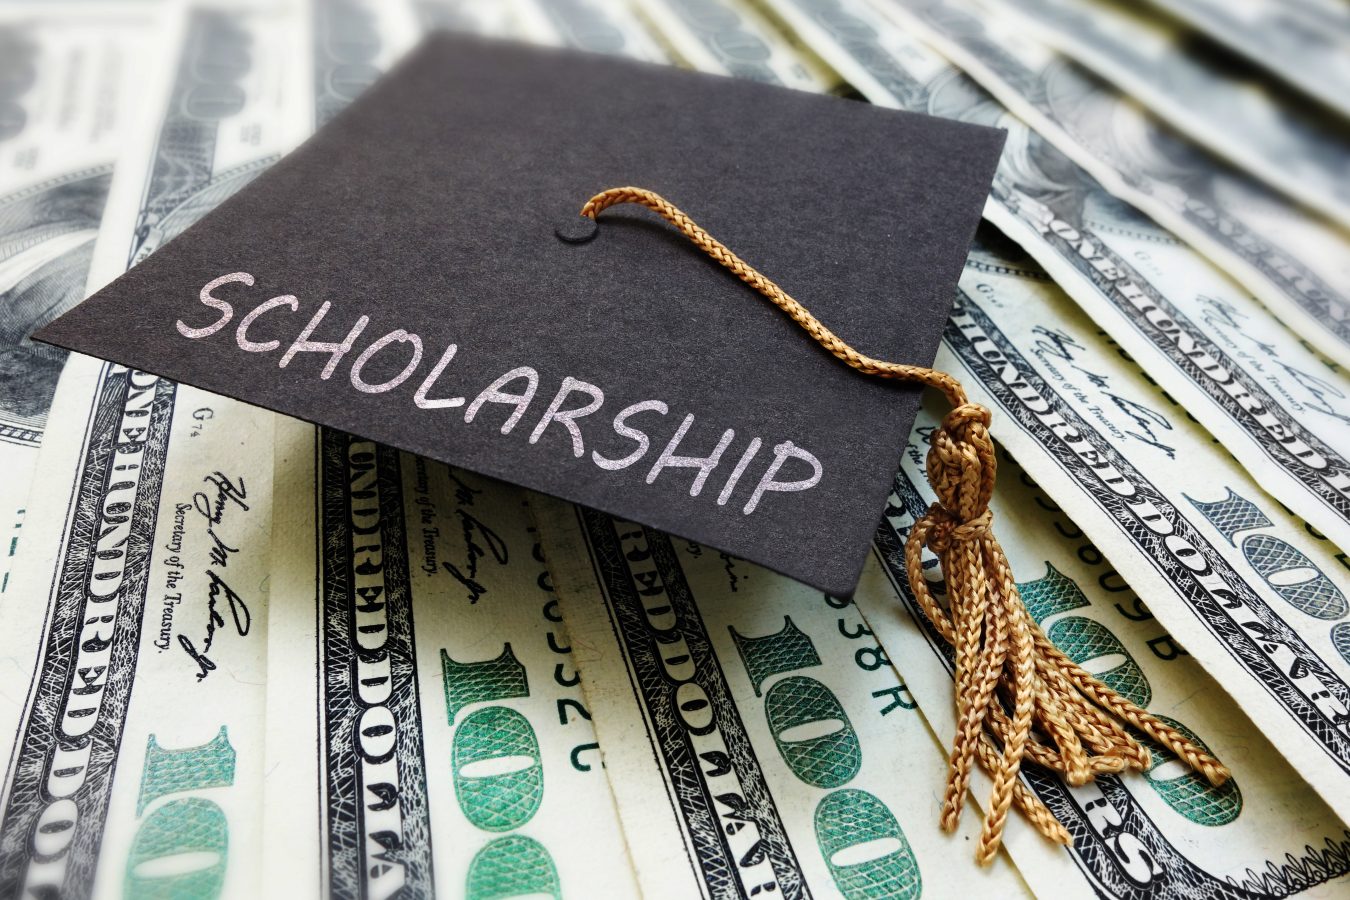 Grad cap with "scholarship" written across it sitting atop $100 bills.